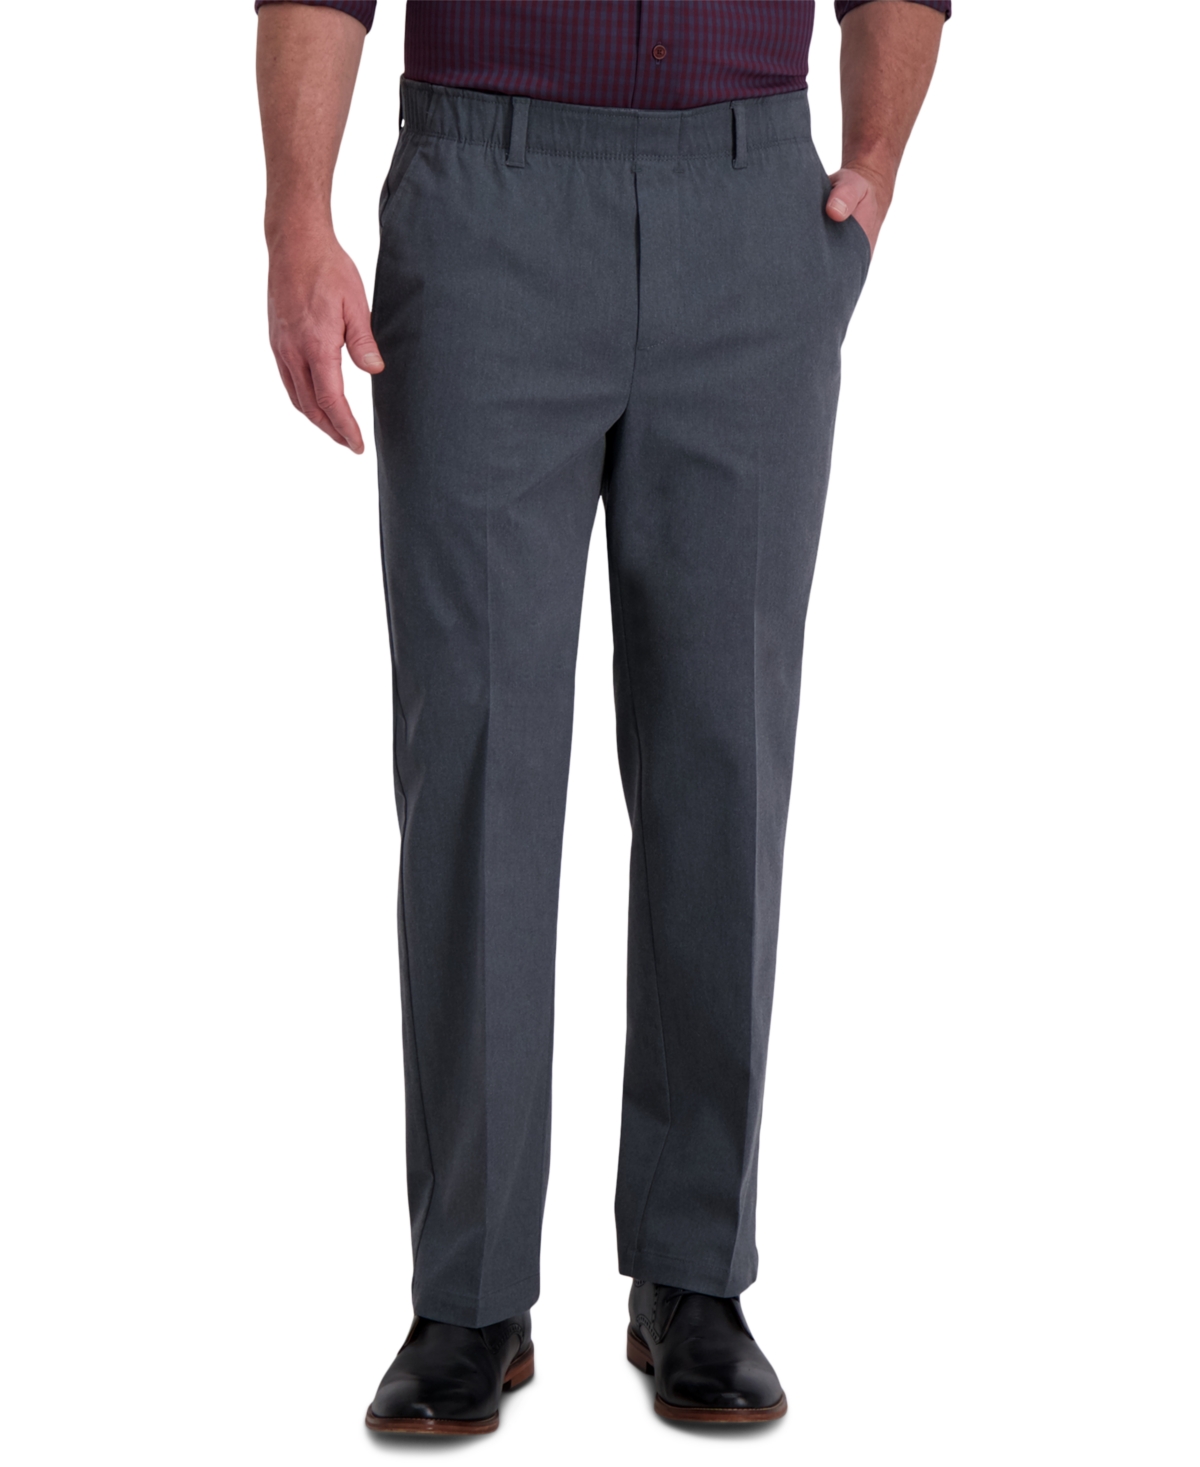 Men's Premium Classic-Fit Wrinkle-Free Stretch Elastic Waistband Dress Pants - Charcoal